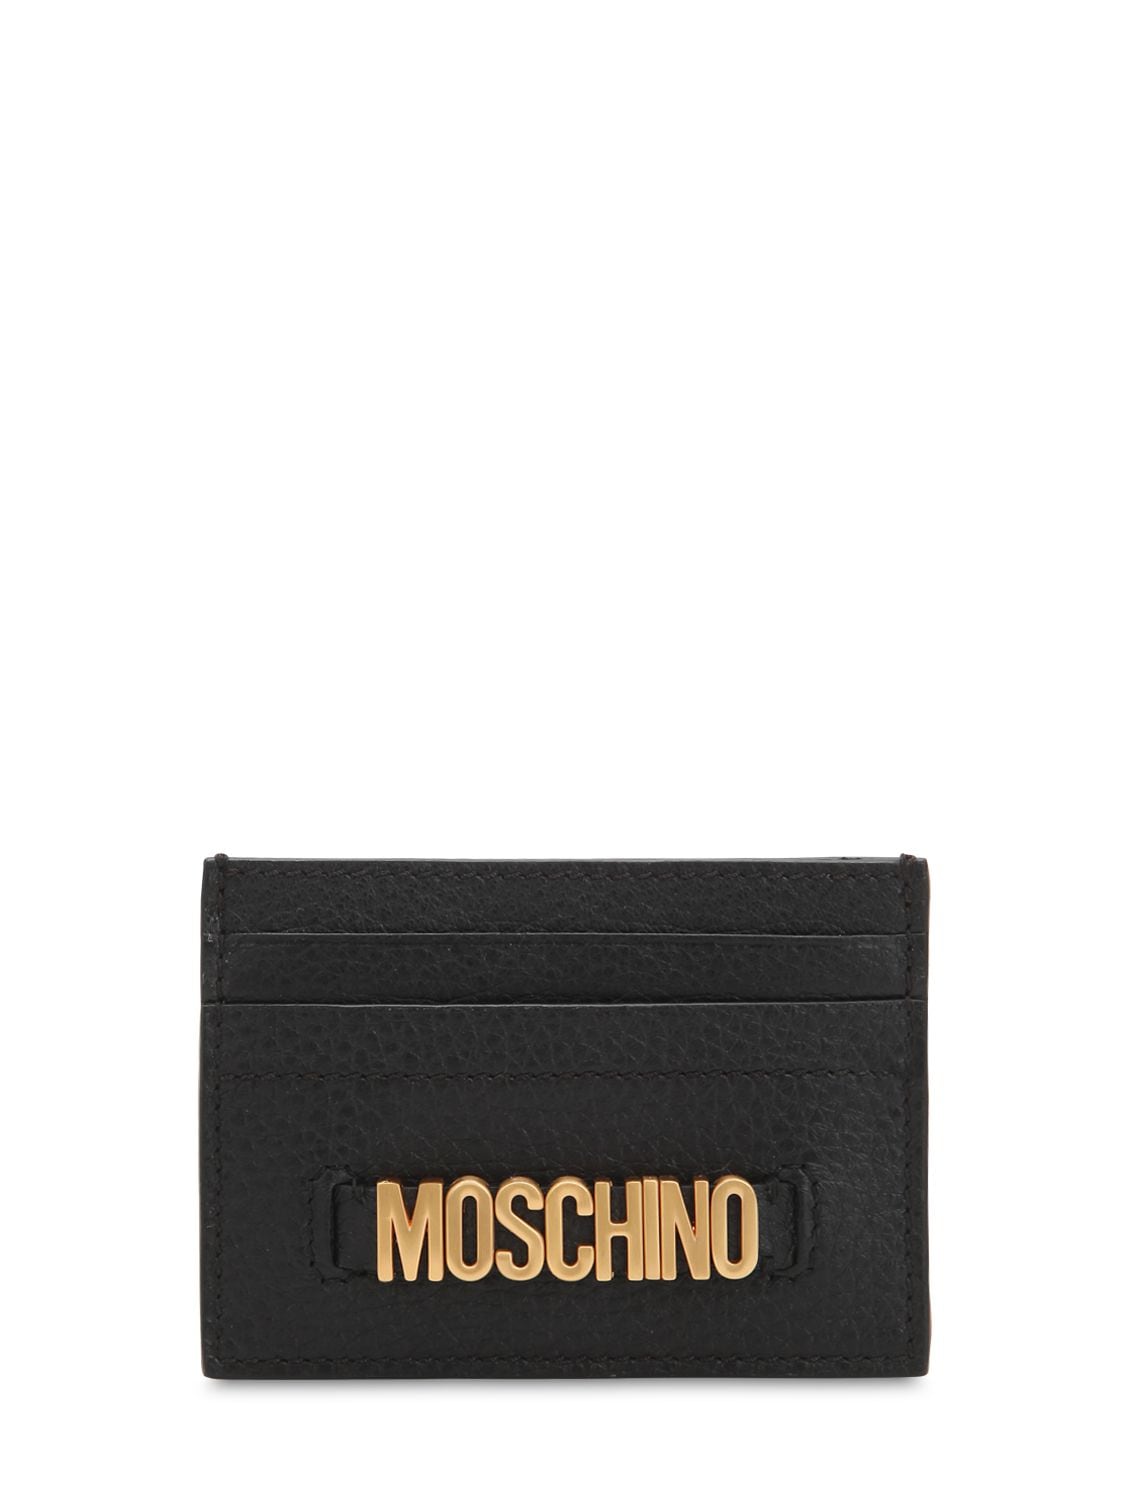 MOSCHINO LETTERED LOGO LEATHER CARD HOLDER,71IL0M033-QTA1NTU1